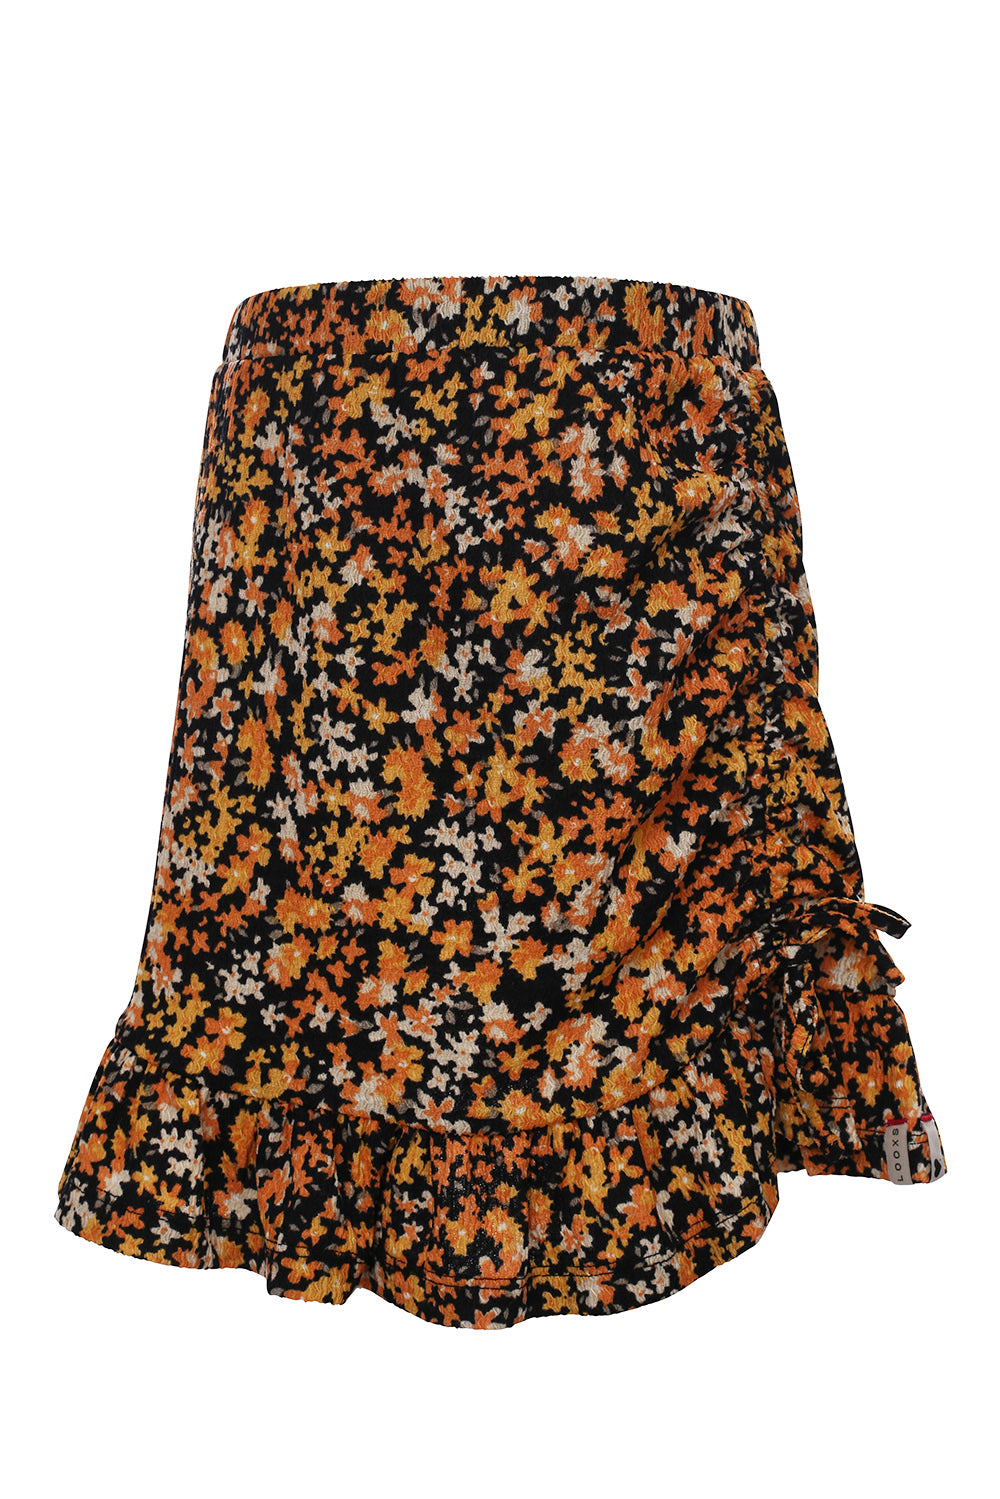 LOOXS 10sixteen Crinkle Flower Skirt